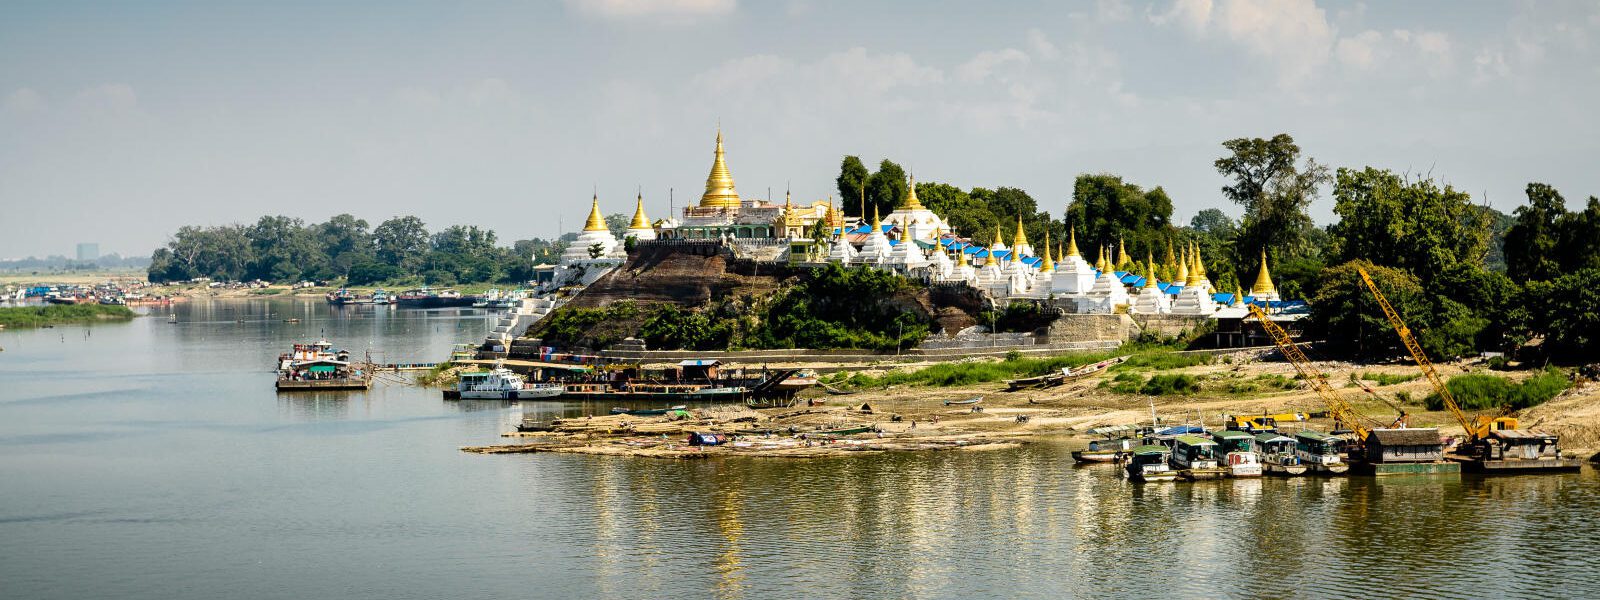 Golden pagodas on the Ayeyarwady River